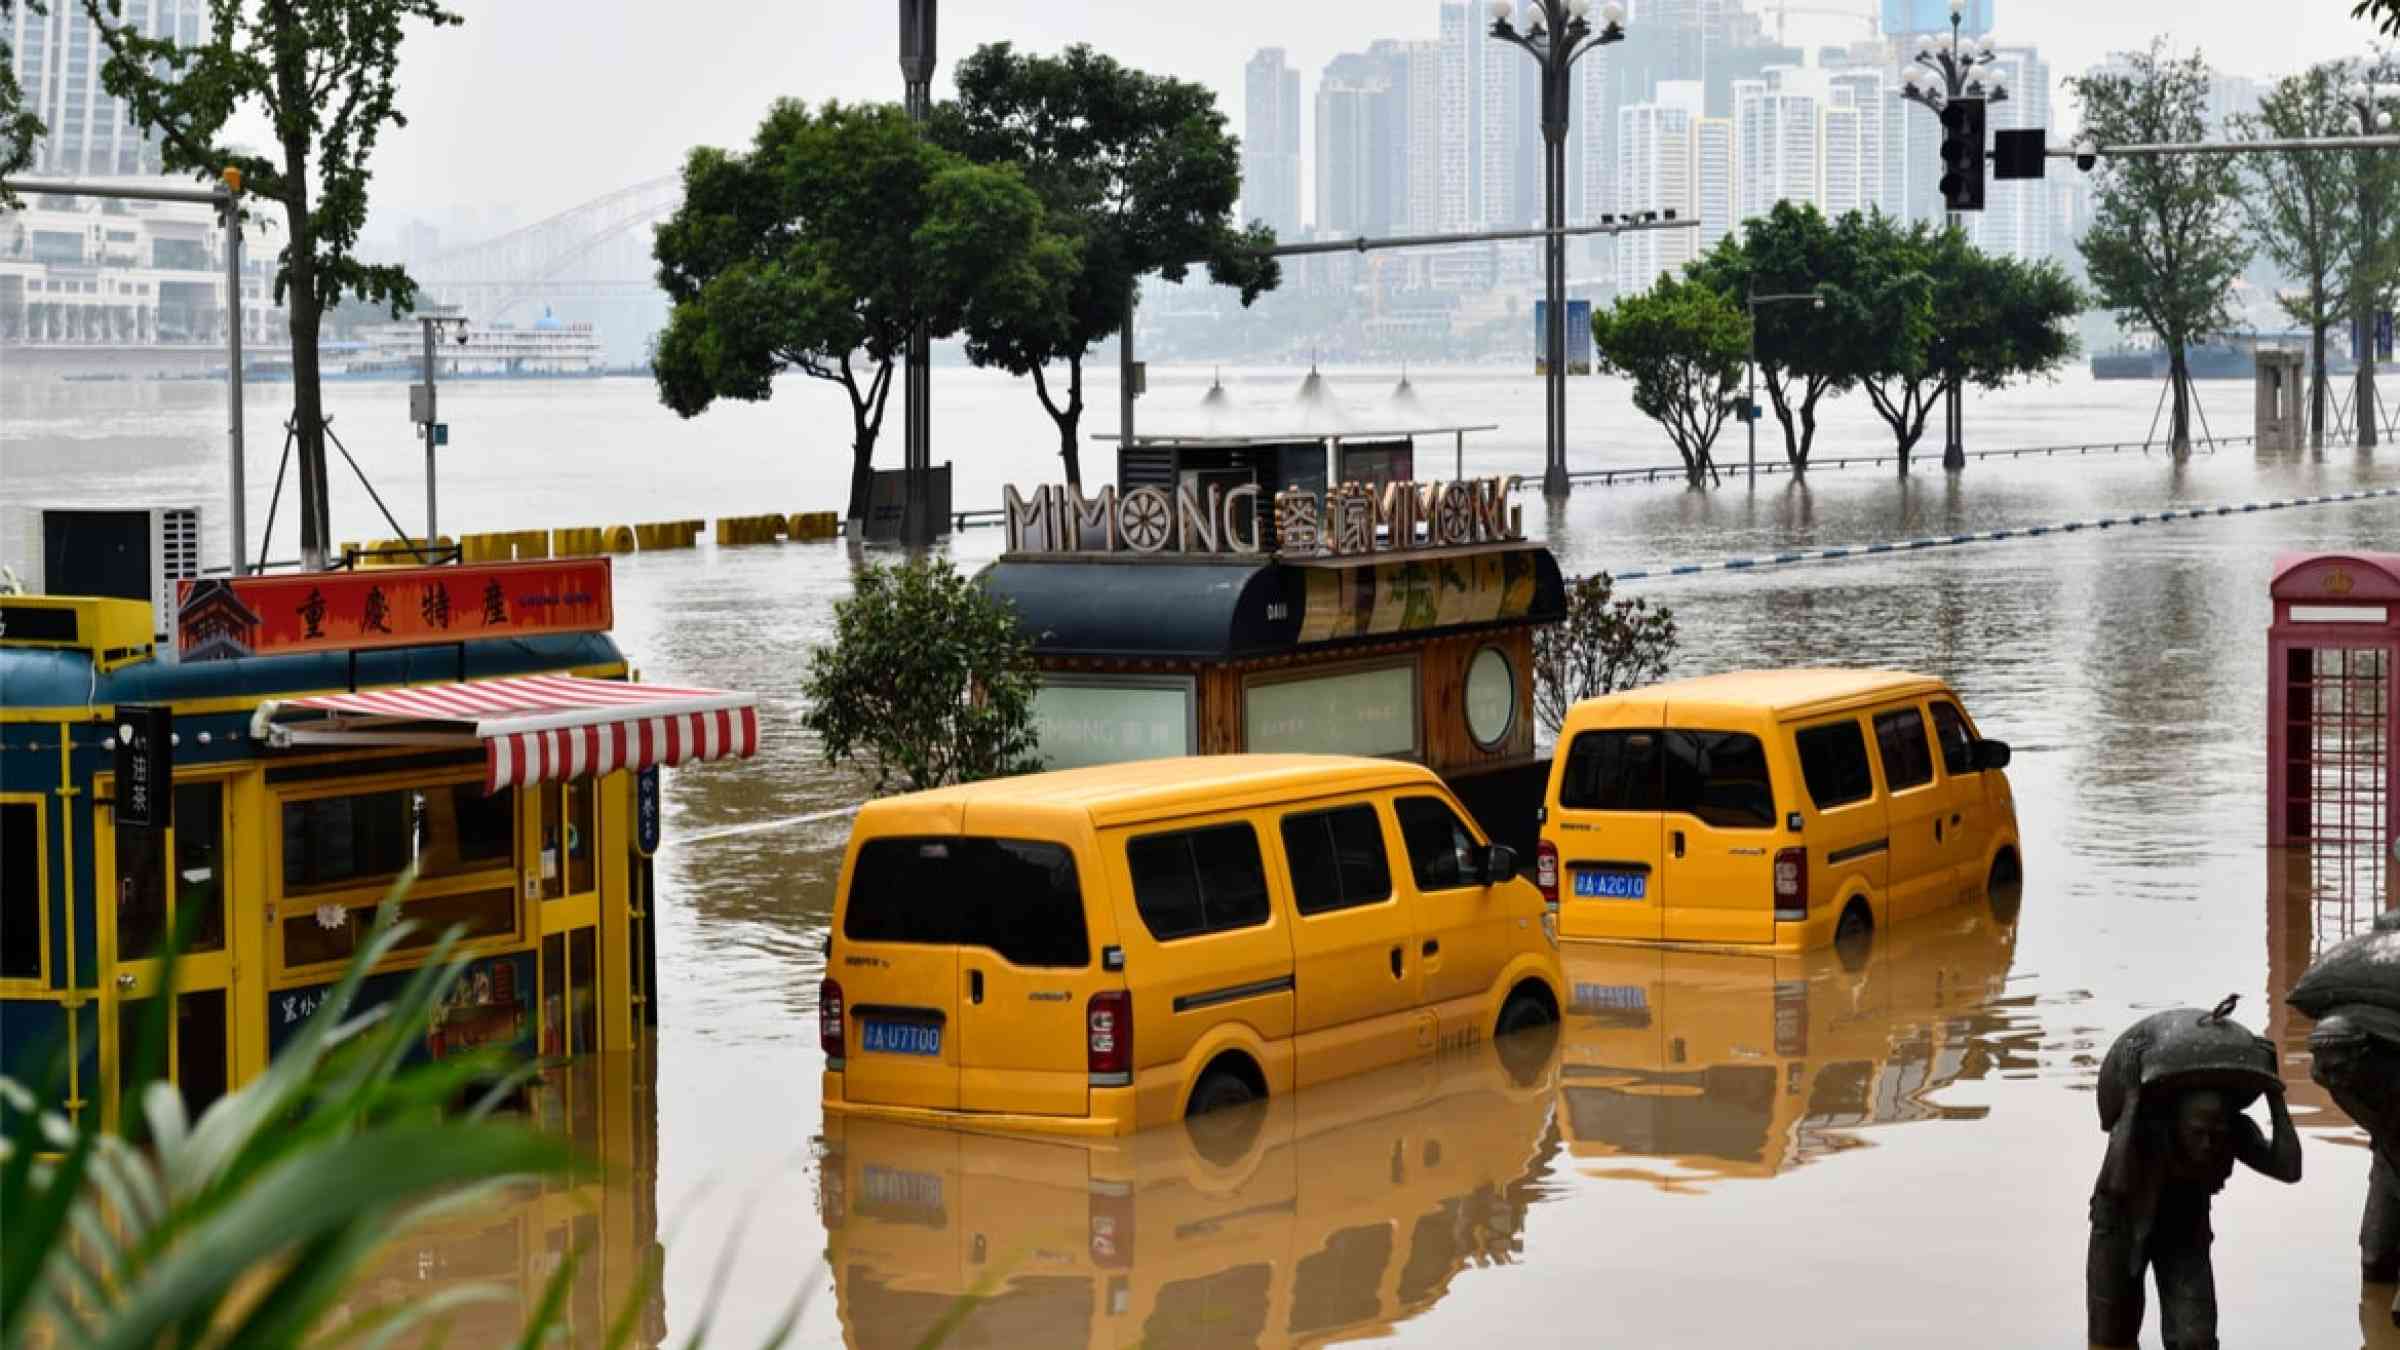 The Yangtze River has flooded Chongqing, China in 2020